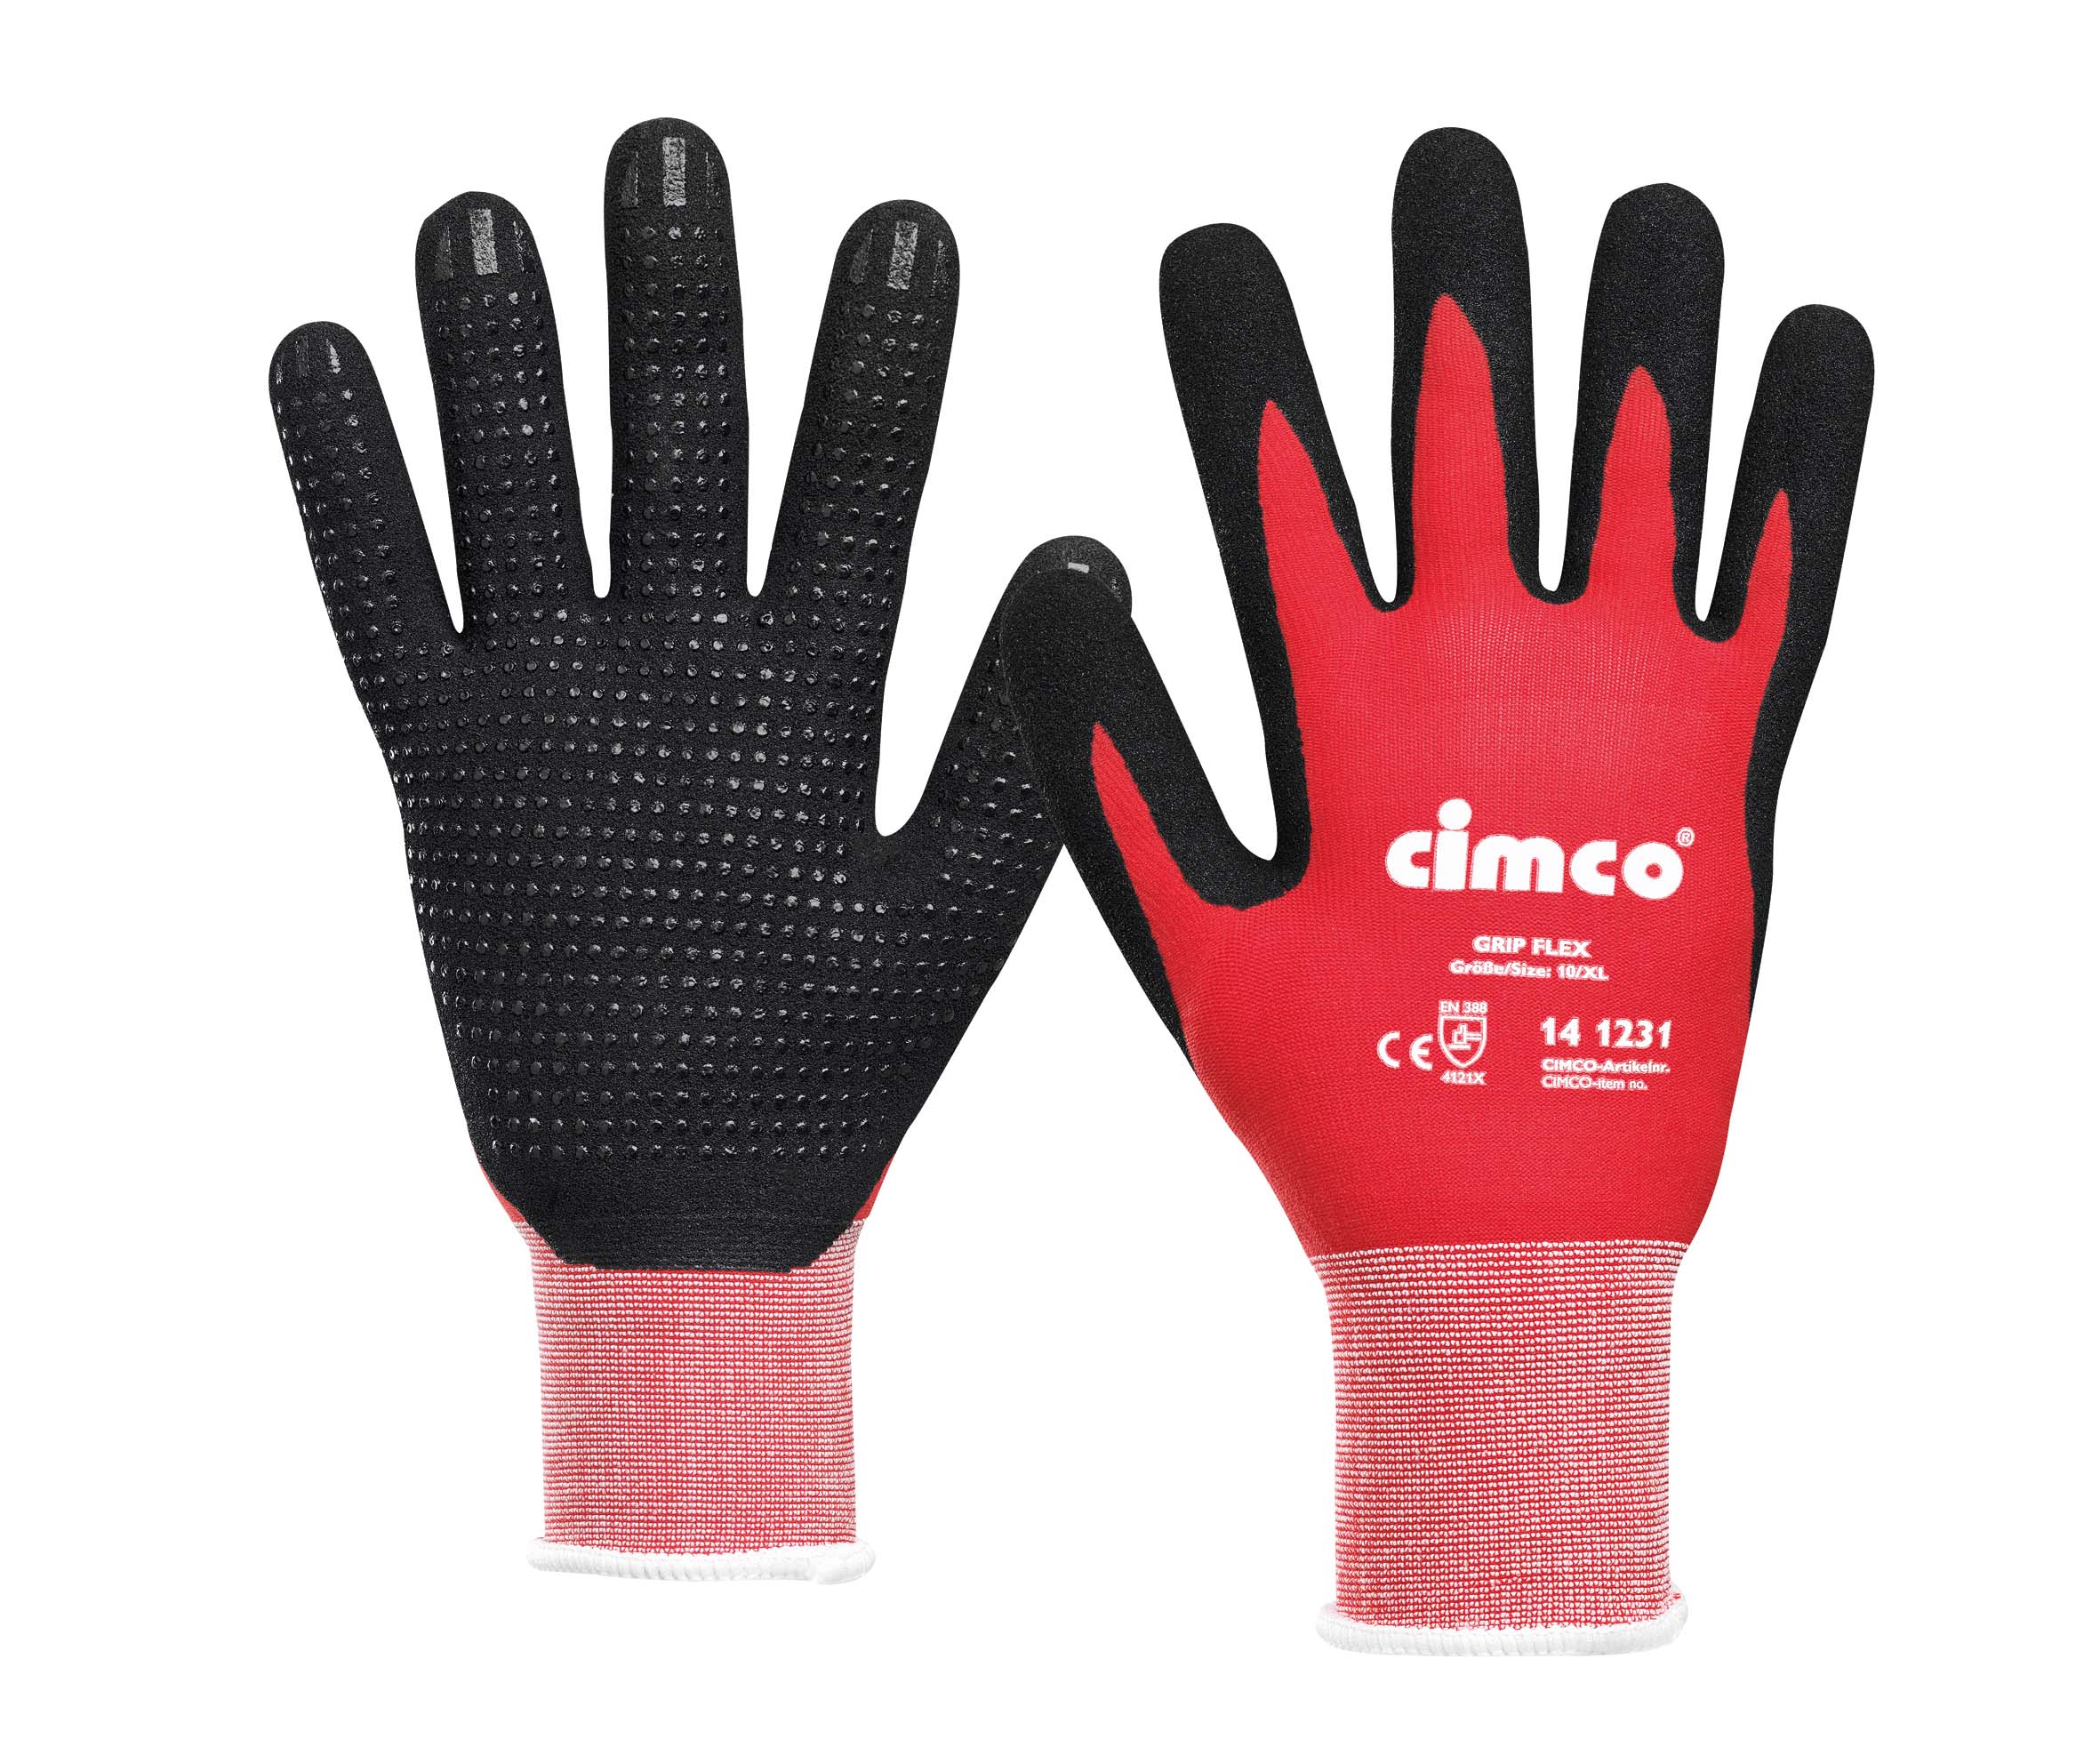  Werkhandschoenen Grip Flex, zwart/rood, Maat 9/L 